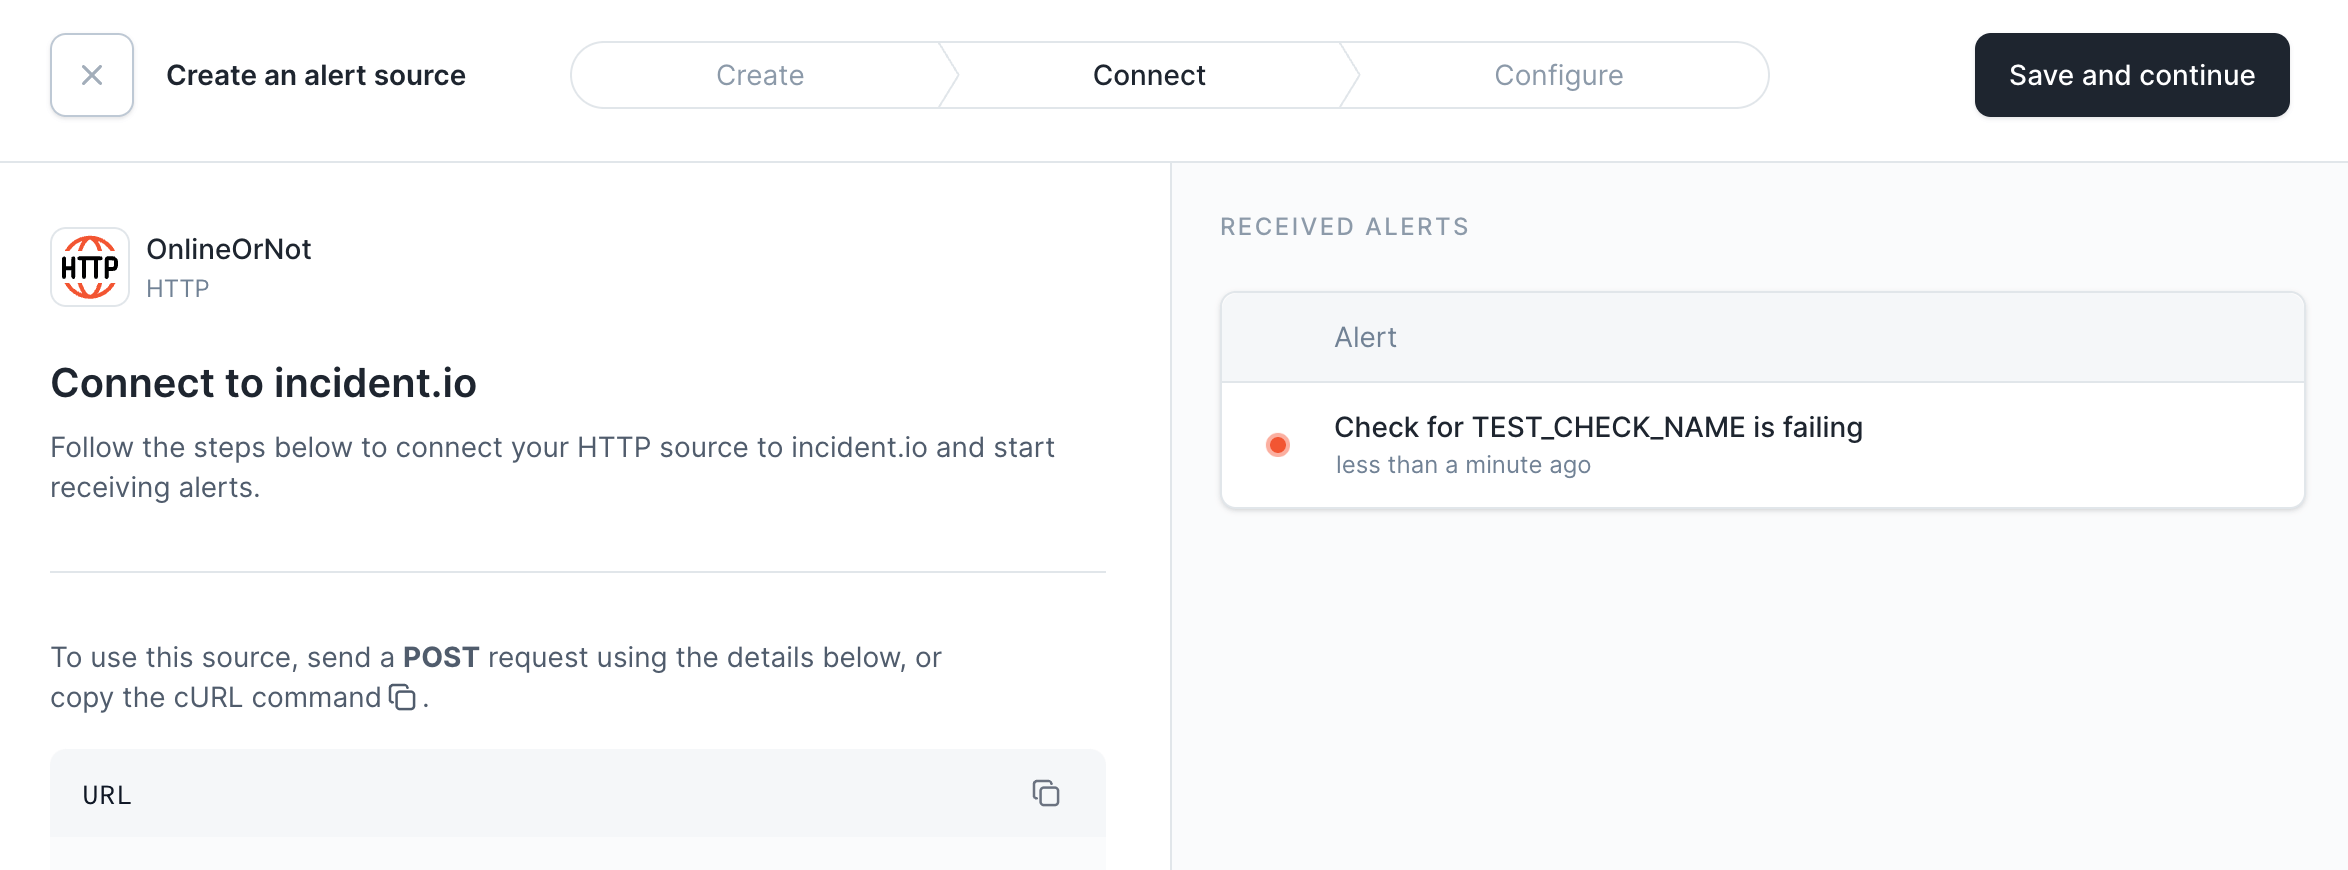 onlineornot test incident.io integration result